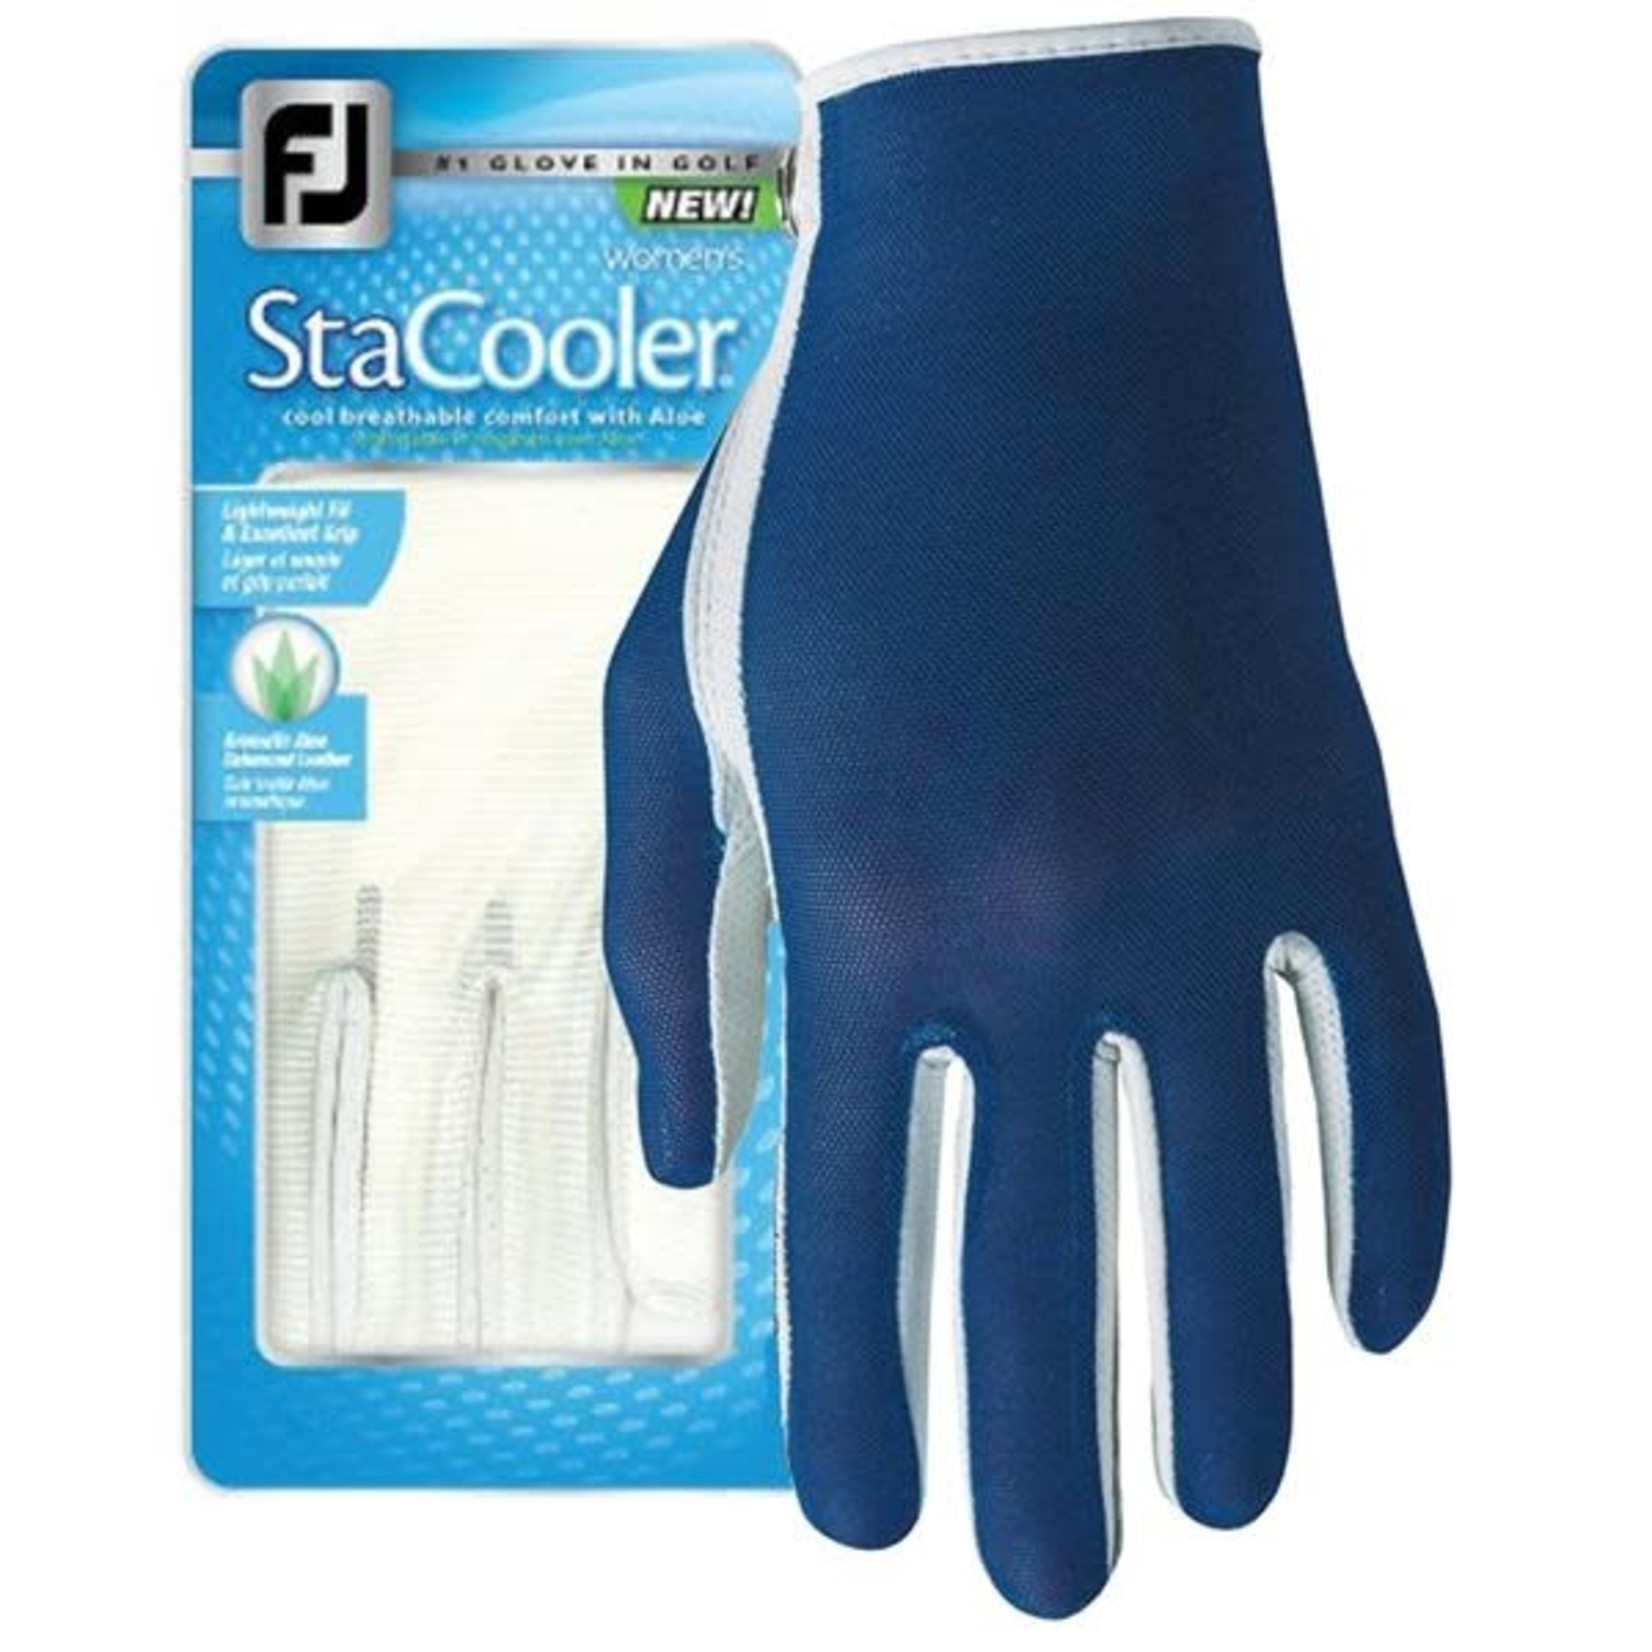 Footjoy FJ StaCooler Wmn's Glove